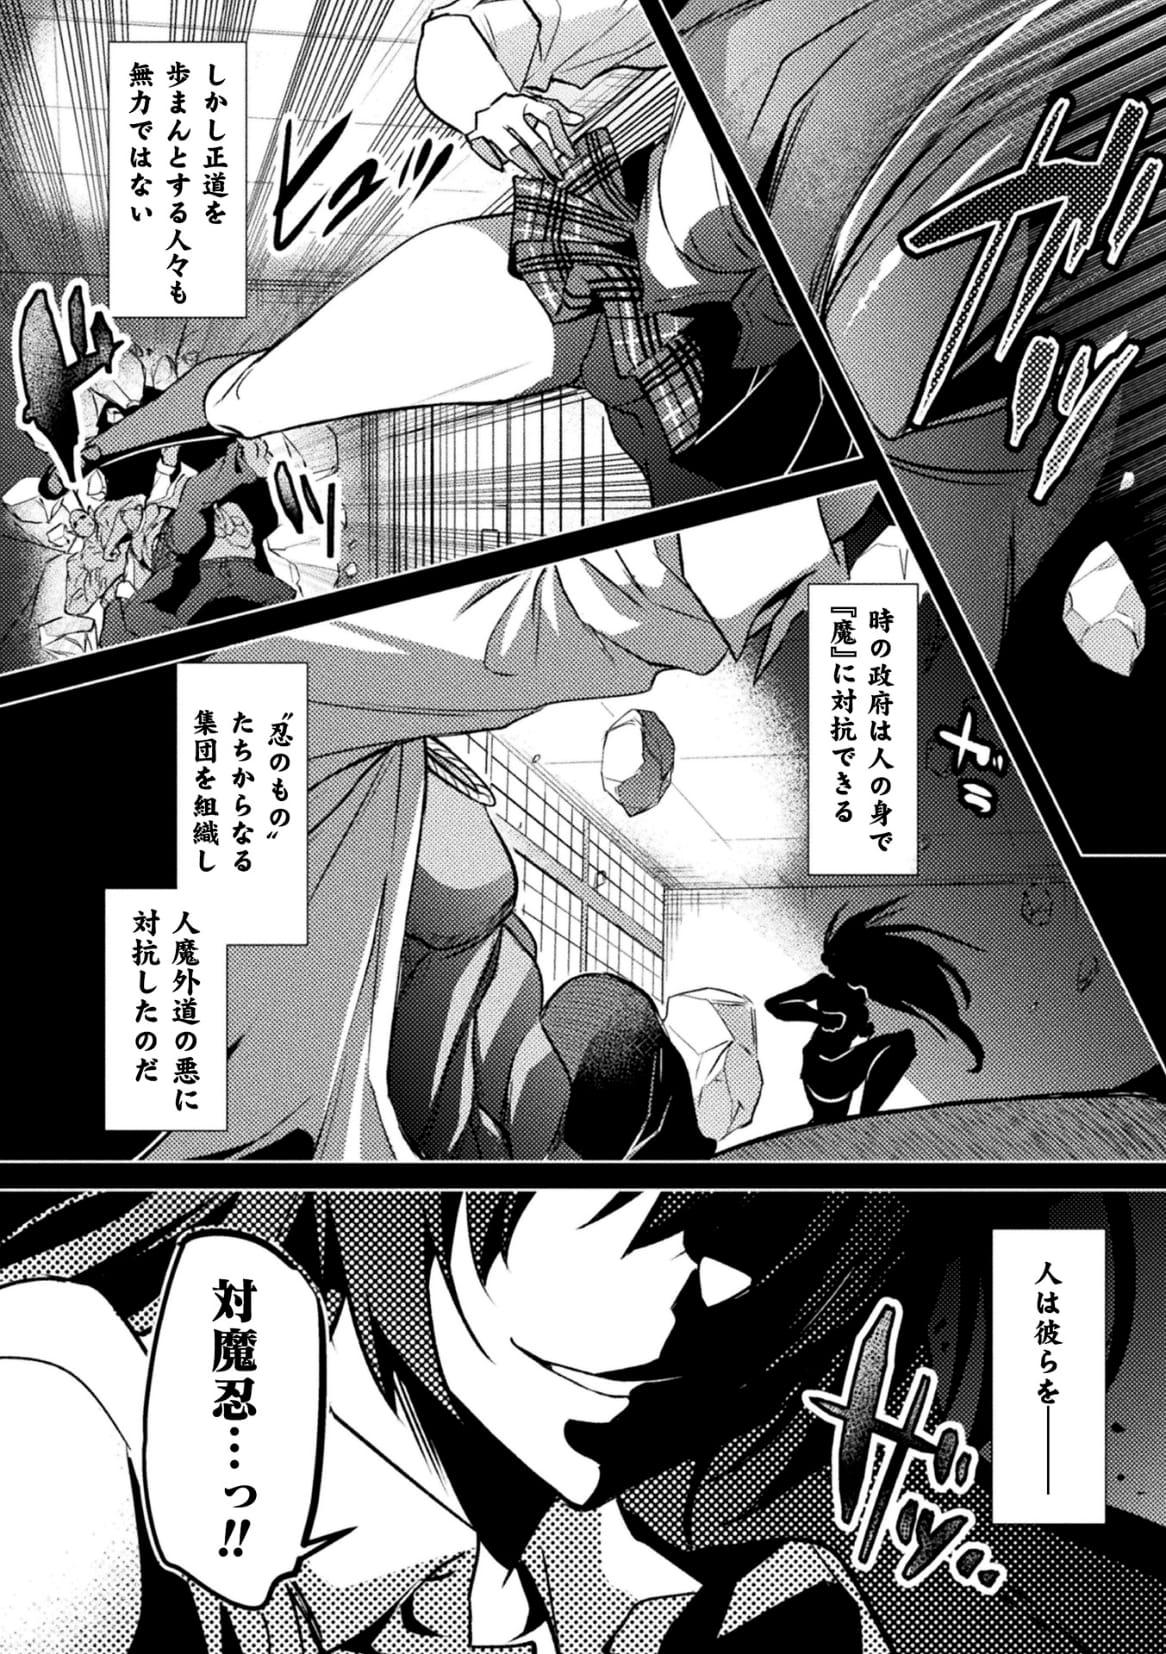 Money Talks Taimanin Asagi ZERO THE COMIC vol 1 - Taimanin asagi Russian - Page 4